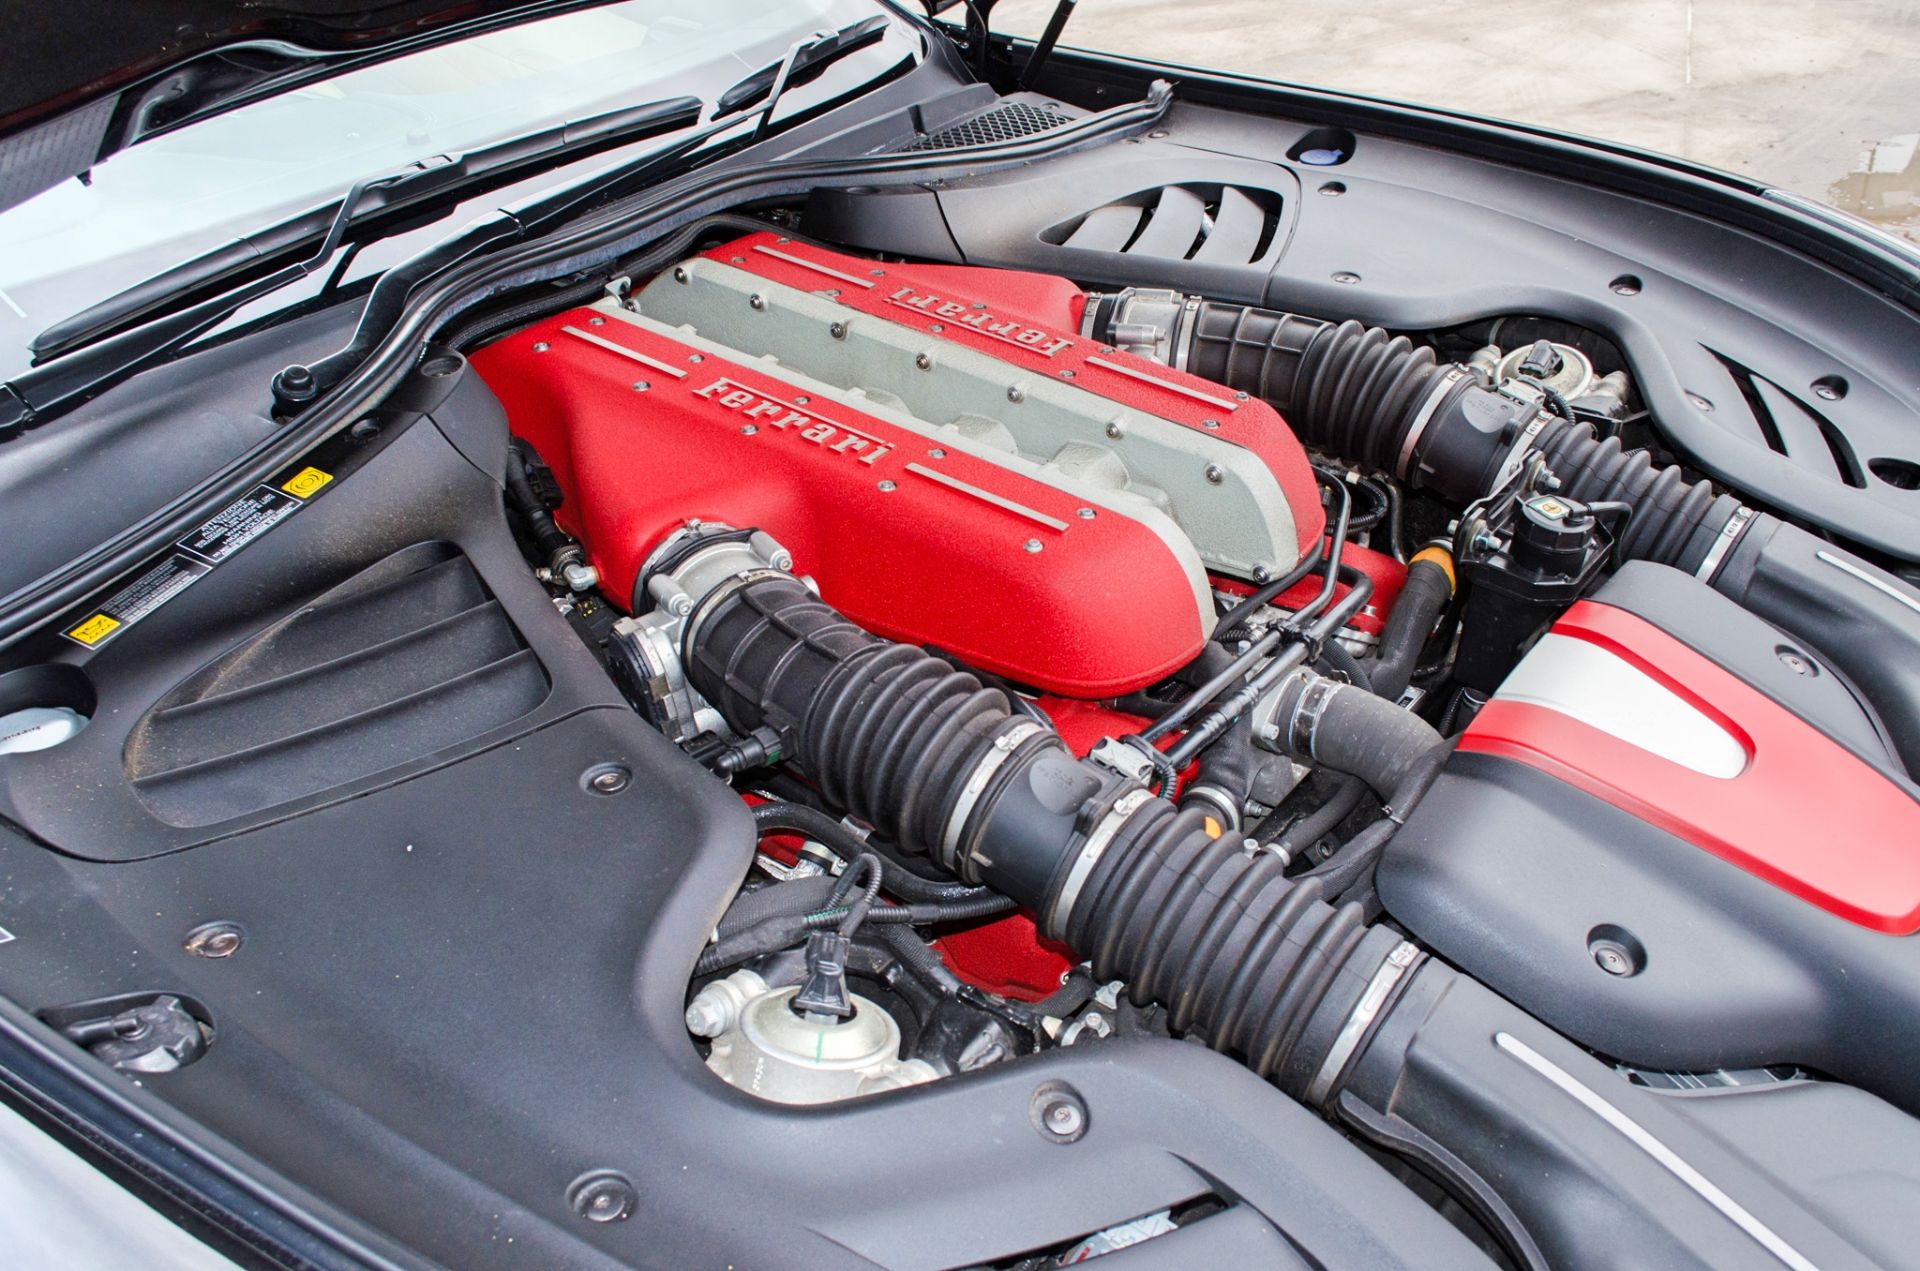 2014 Ferrari FF 6262cc V12 3 door coupe - Image 60 of 74